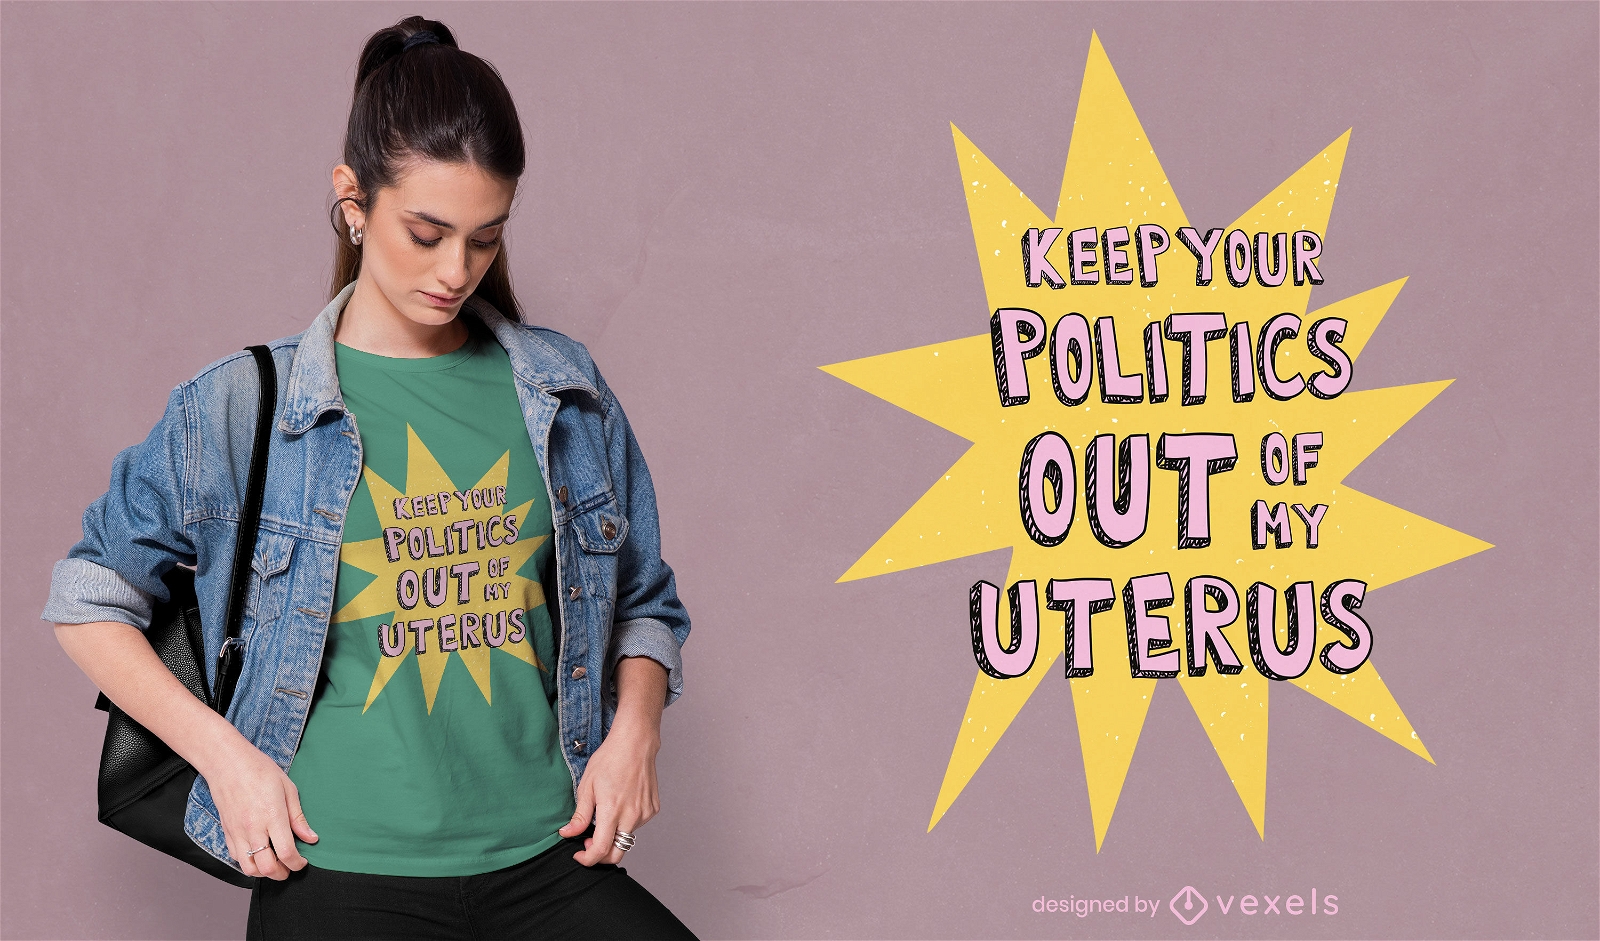 Bodily autonomy uterus t-shirt design